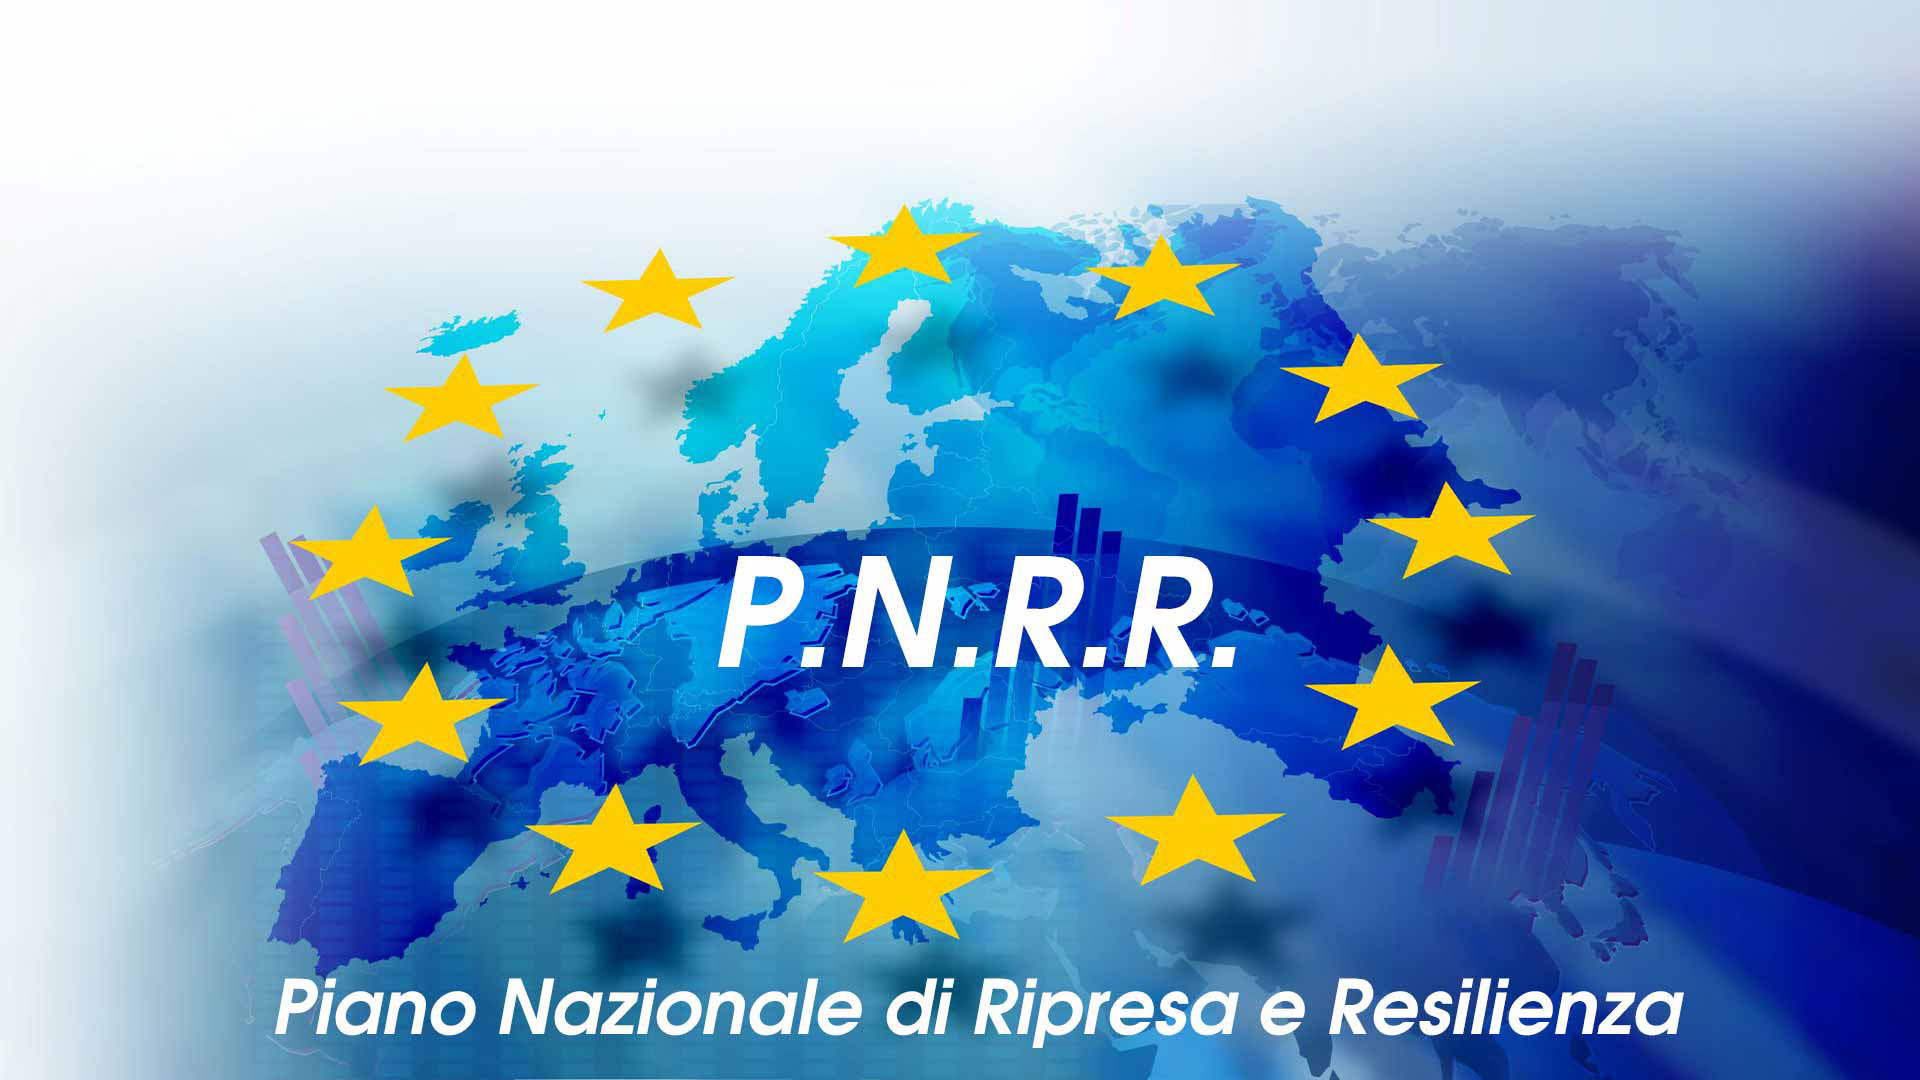 PNRR Next Generation EU 200 small 1080